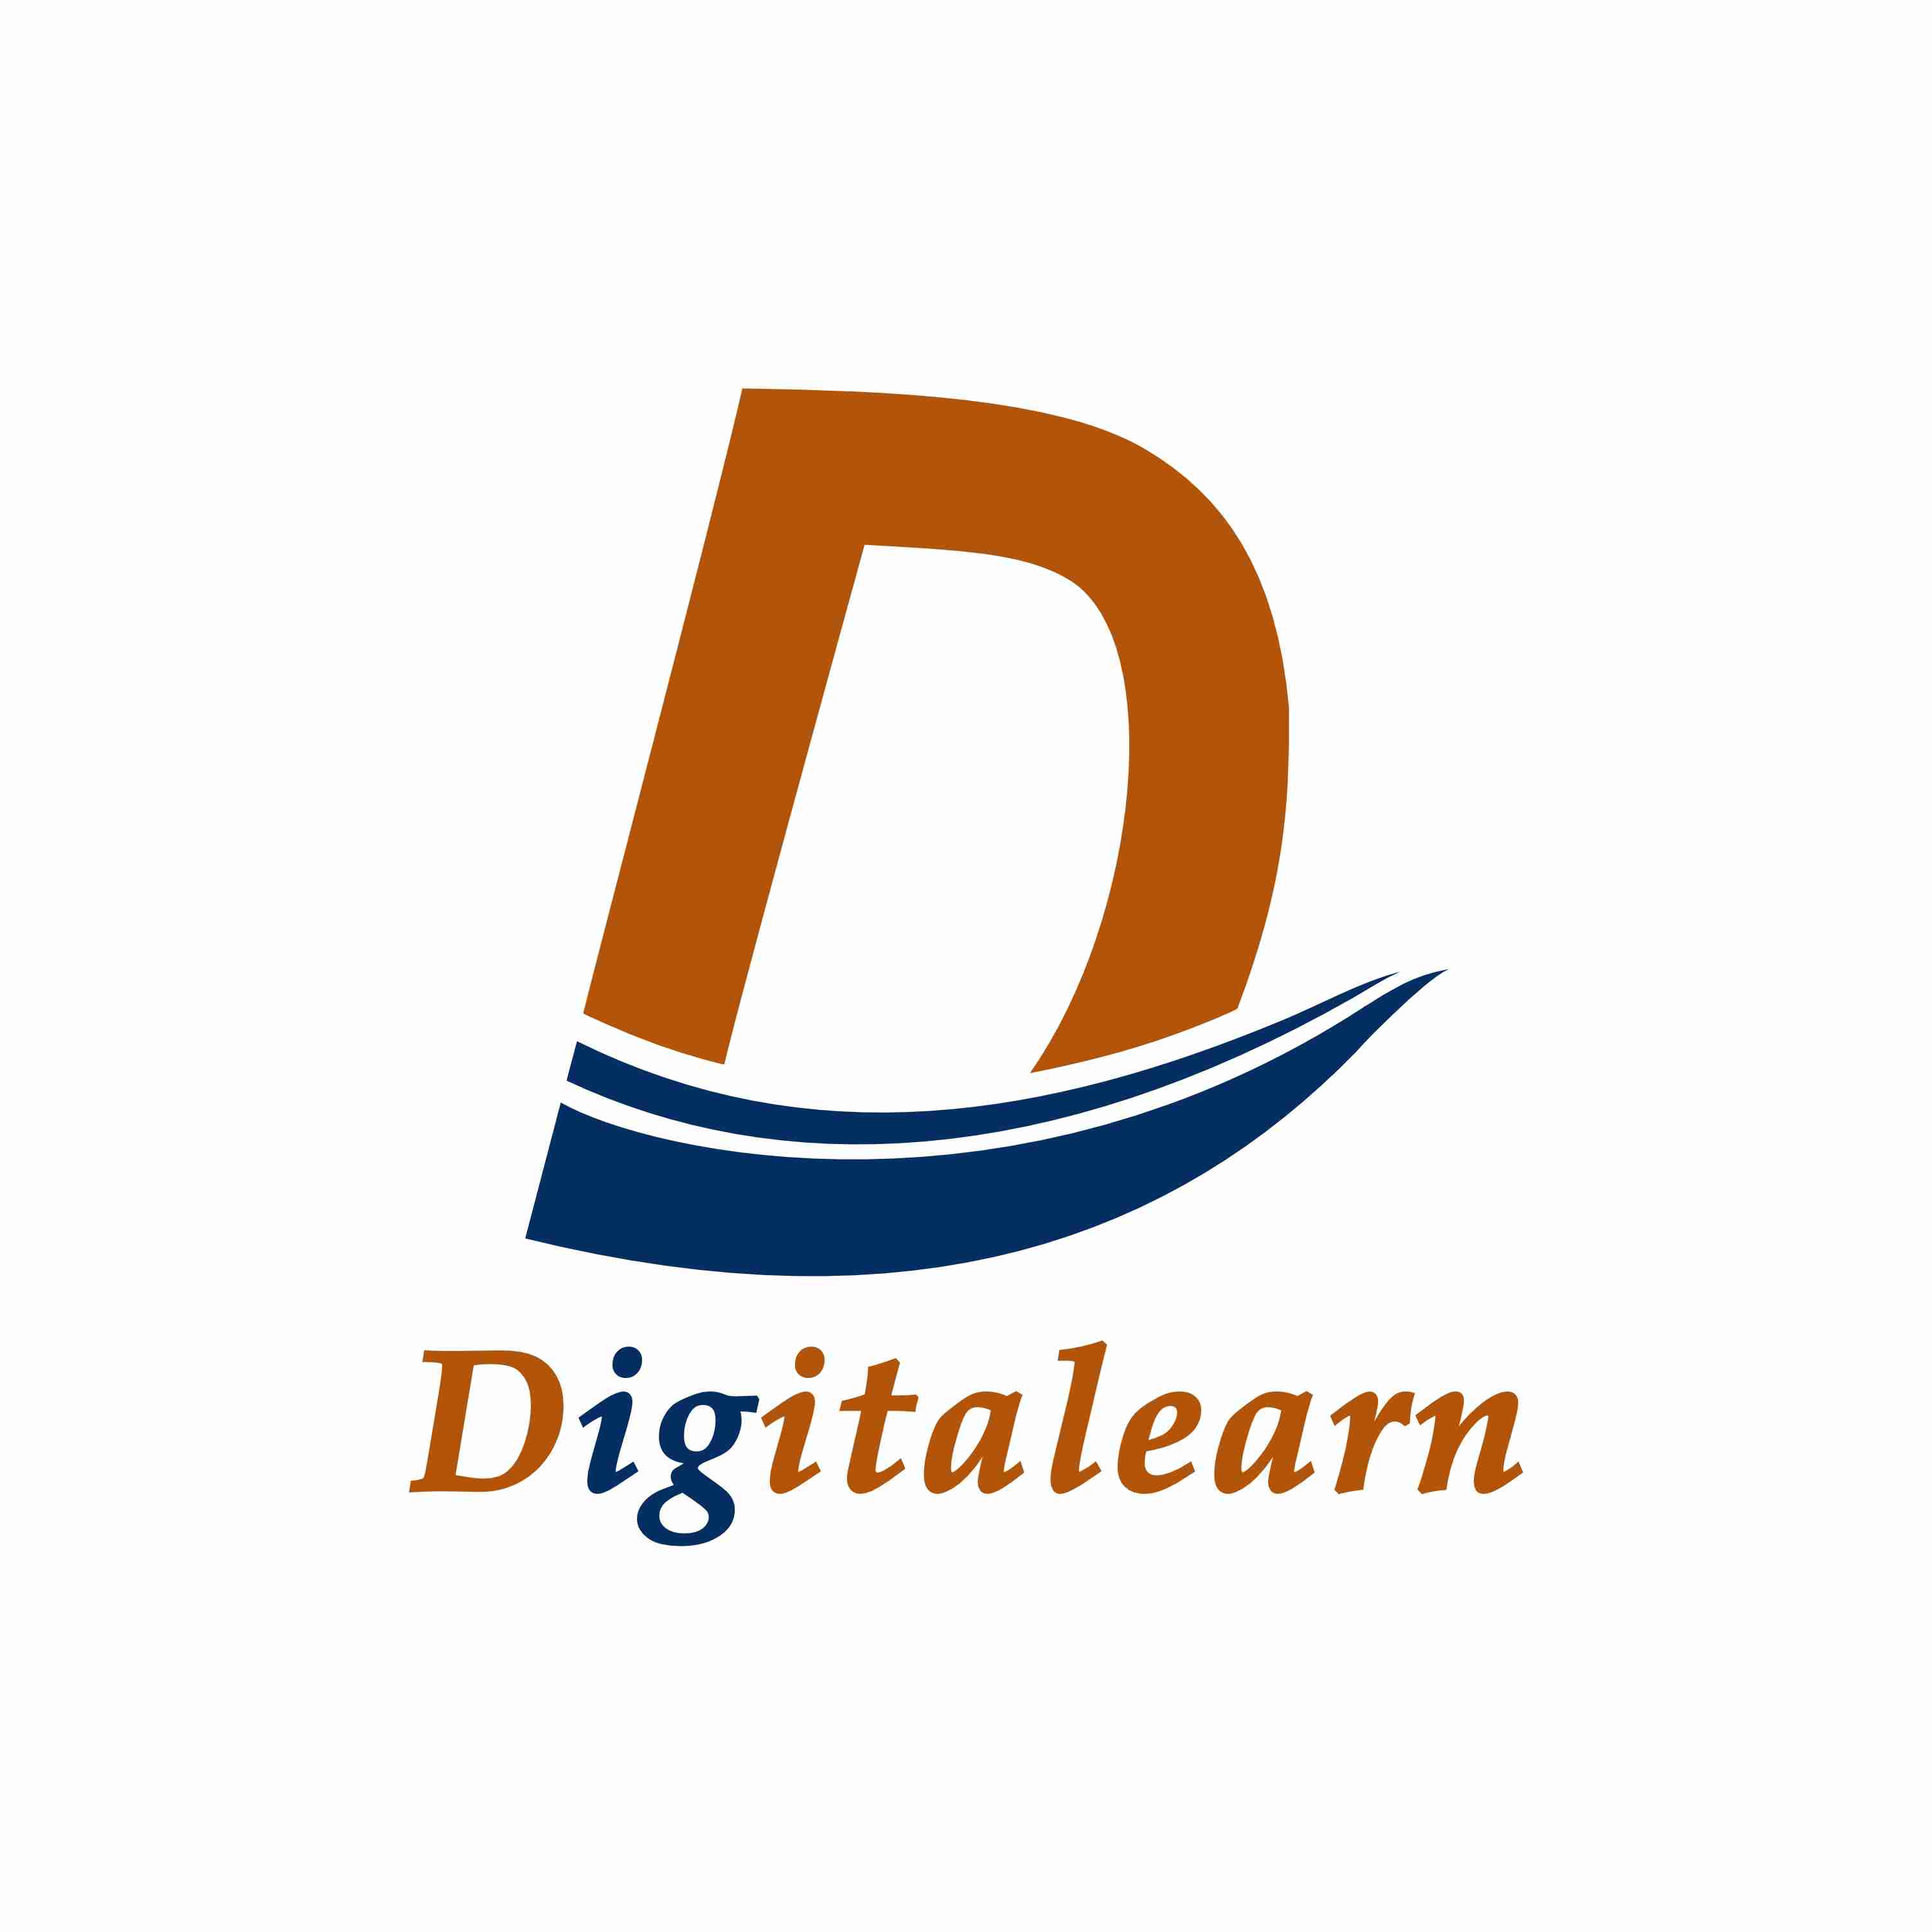 Digital DigitaLearn